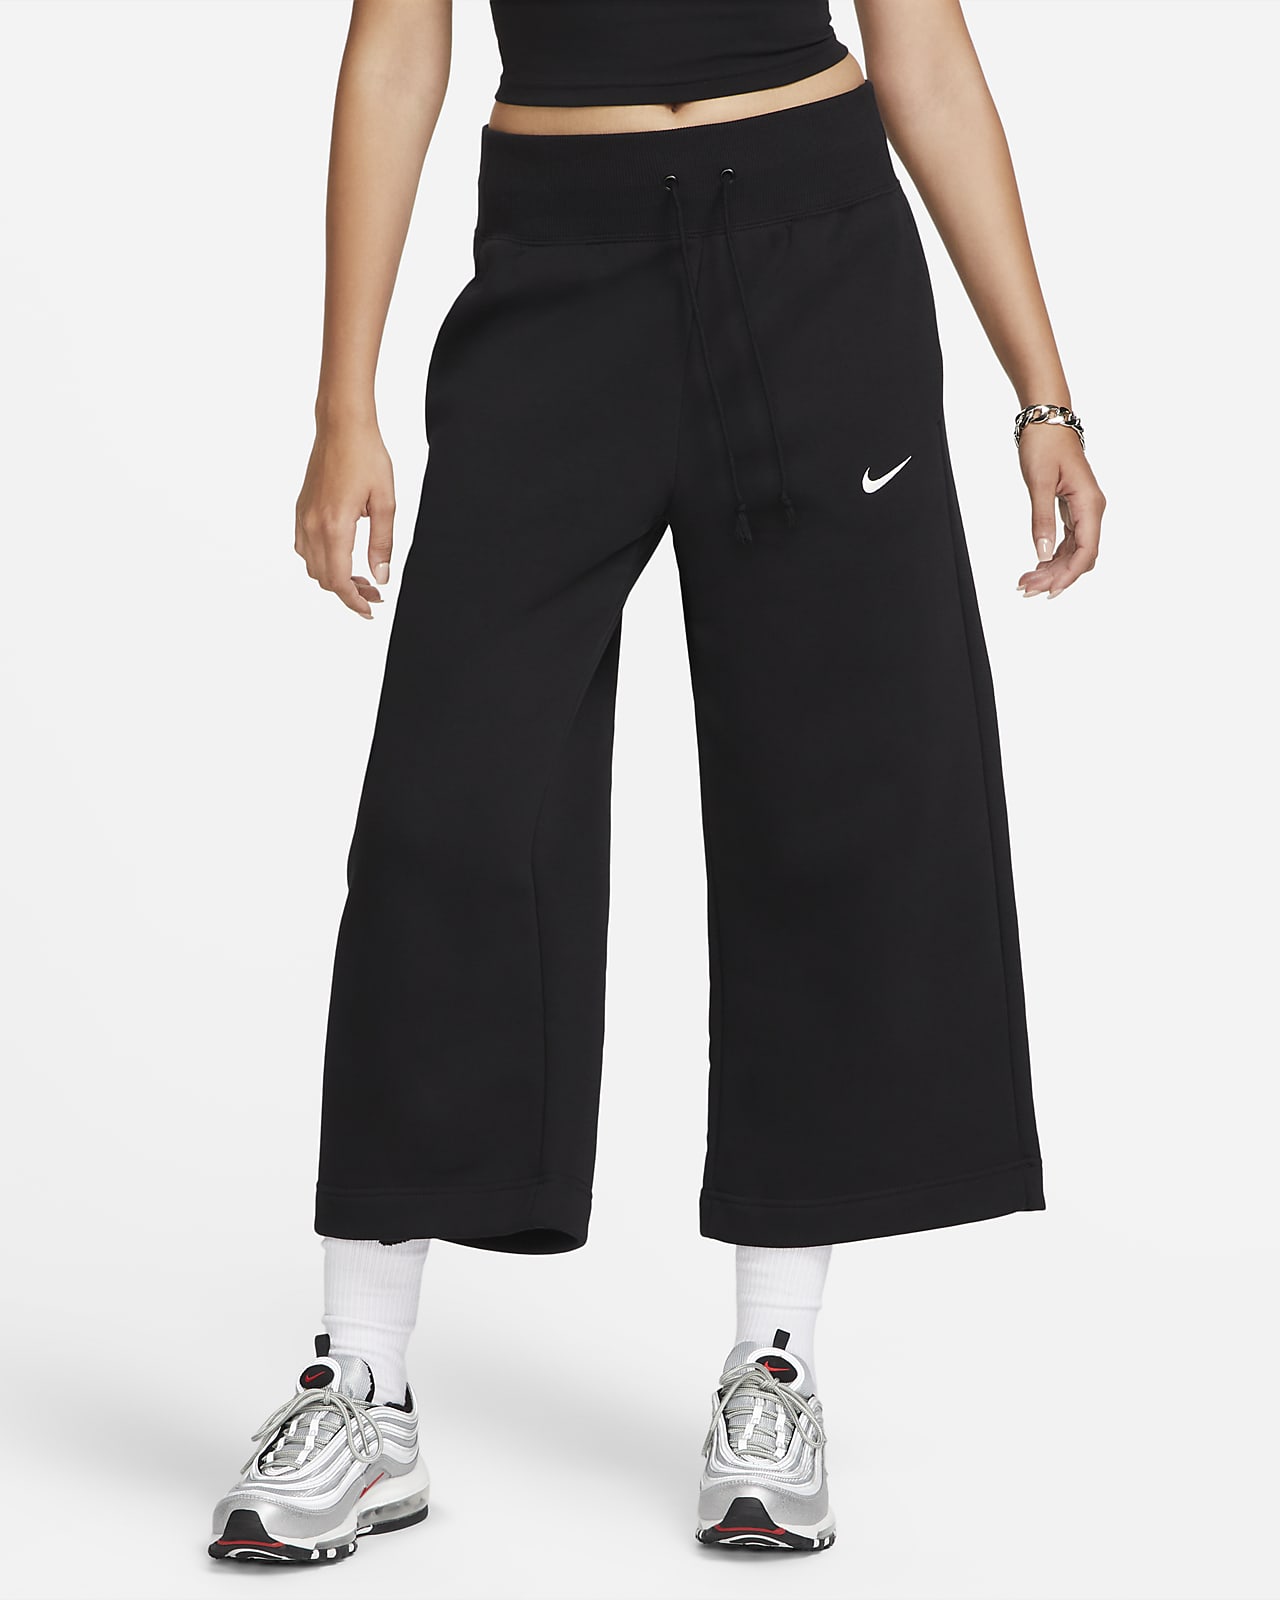 Pantaloni tuta a vita alta e lunghezza ridotta Nike Sportswear Phoenix Fleece – Donna